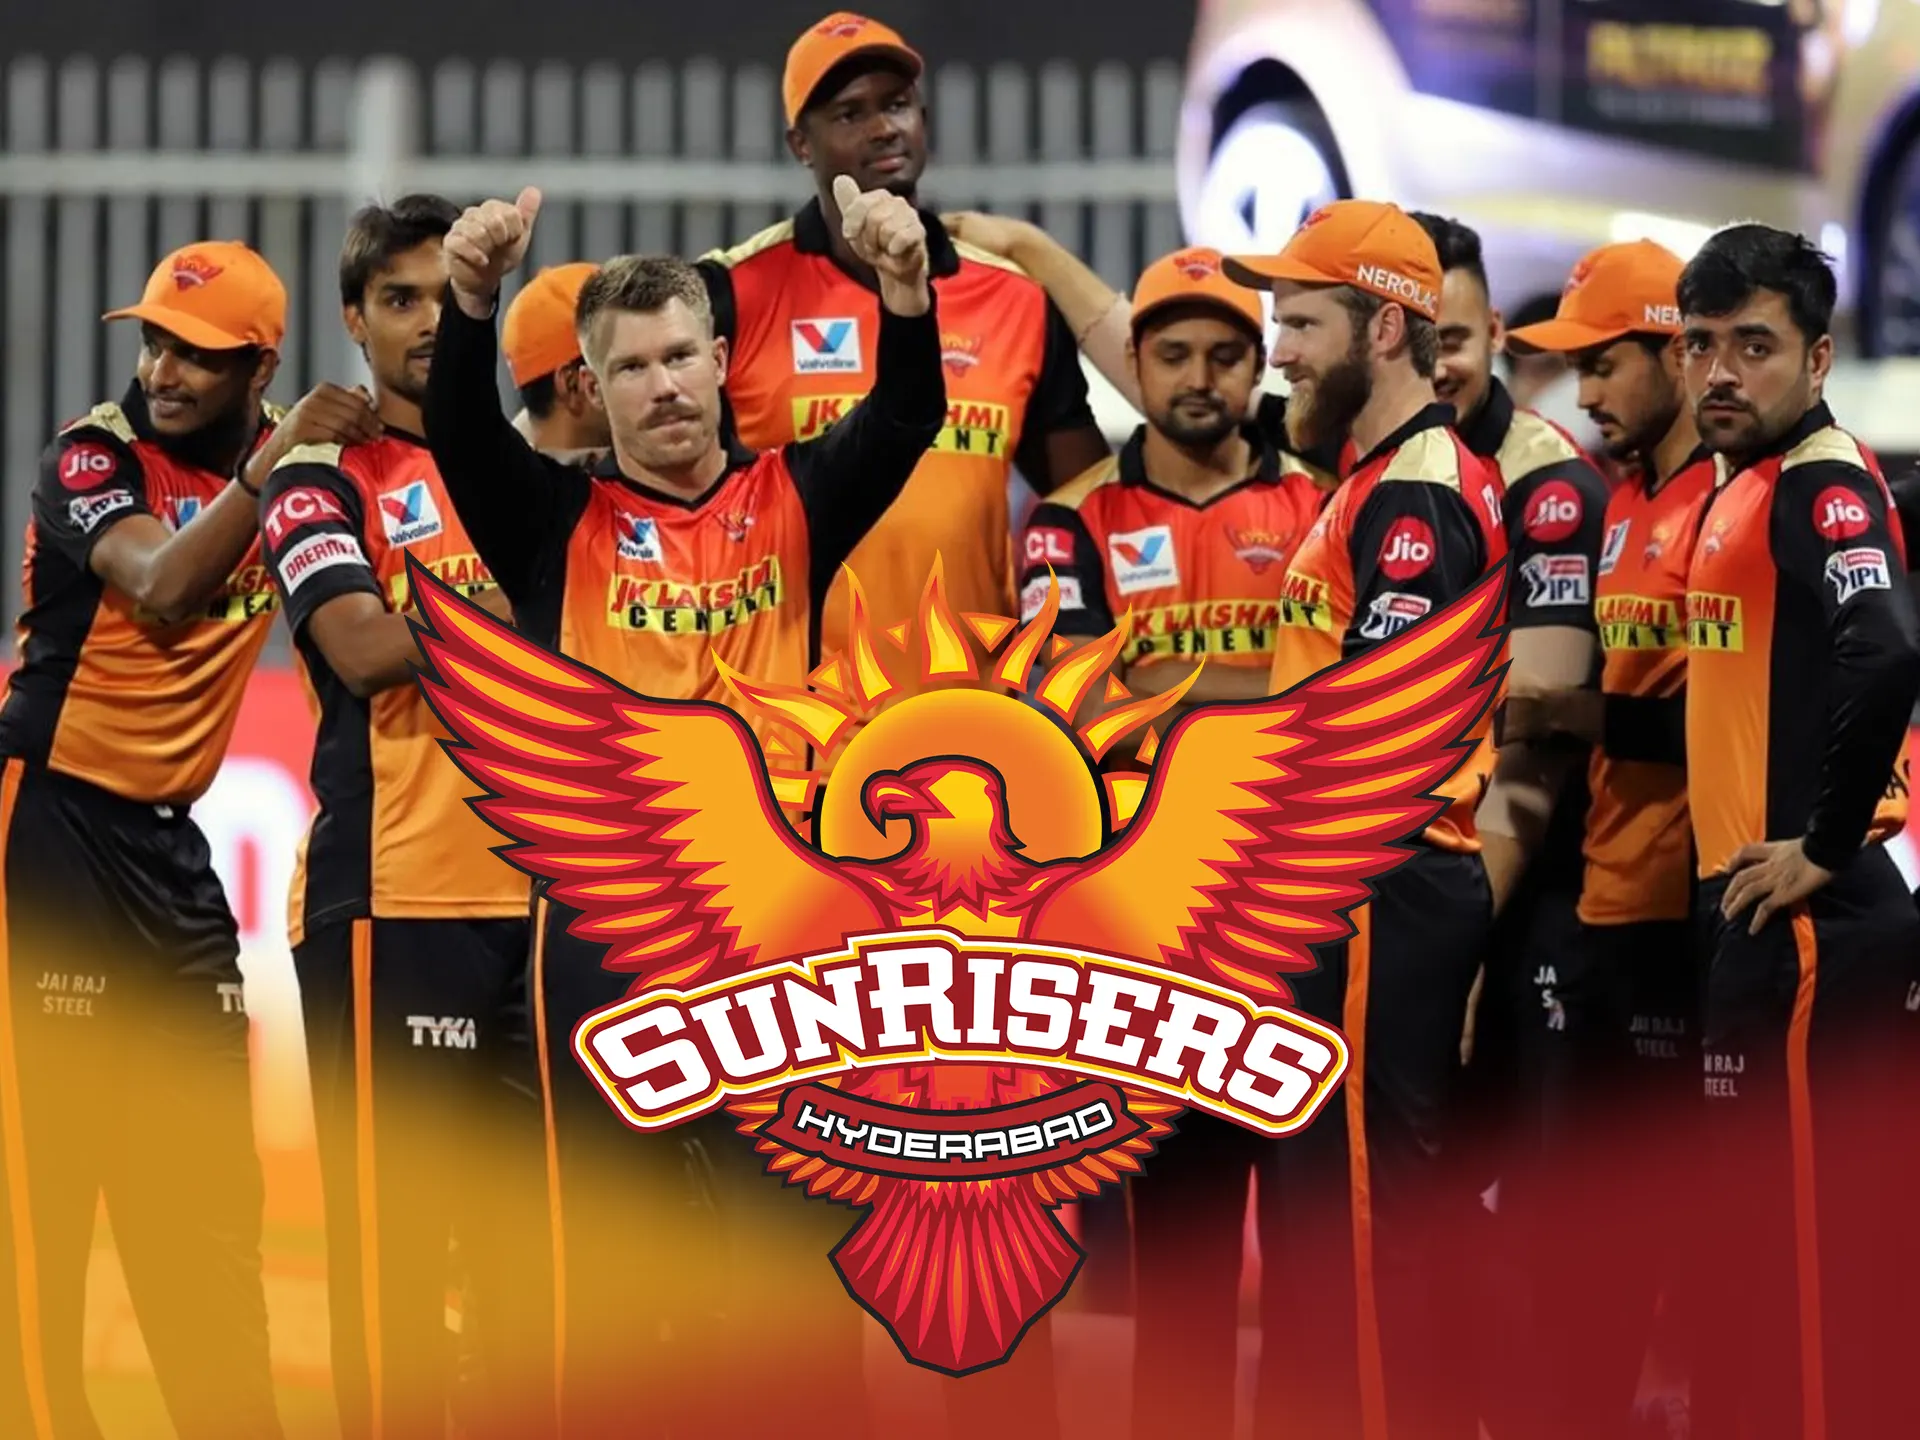 Watch most beatifull IPL matches of Sunrisers Hyderabad.